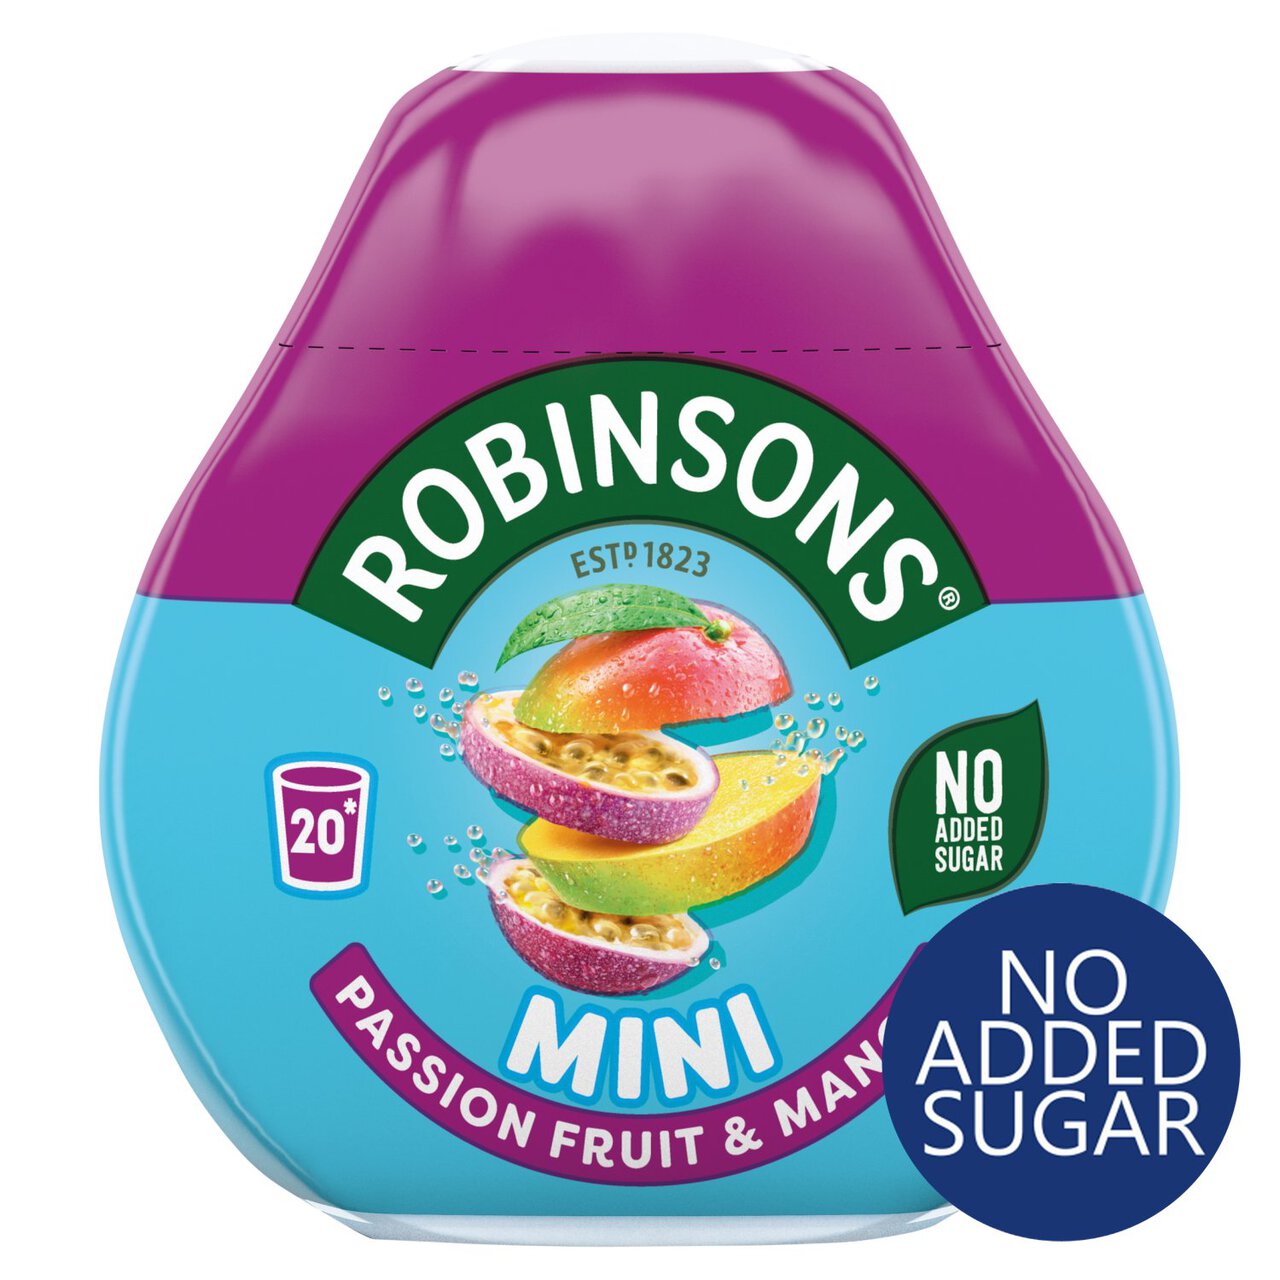 Robinsons Mini Passion Fruit & Mango No Added Sugar 66ml